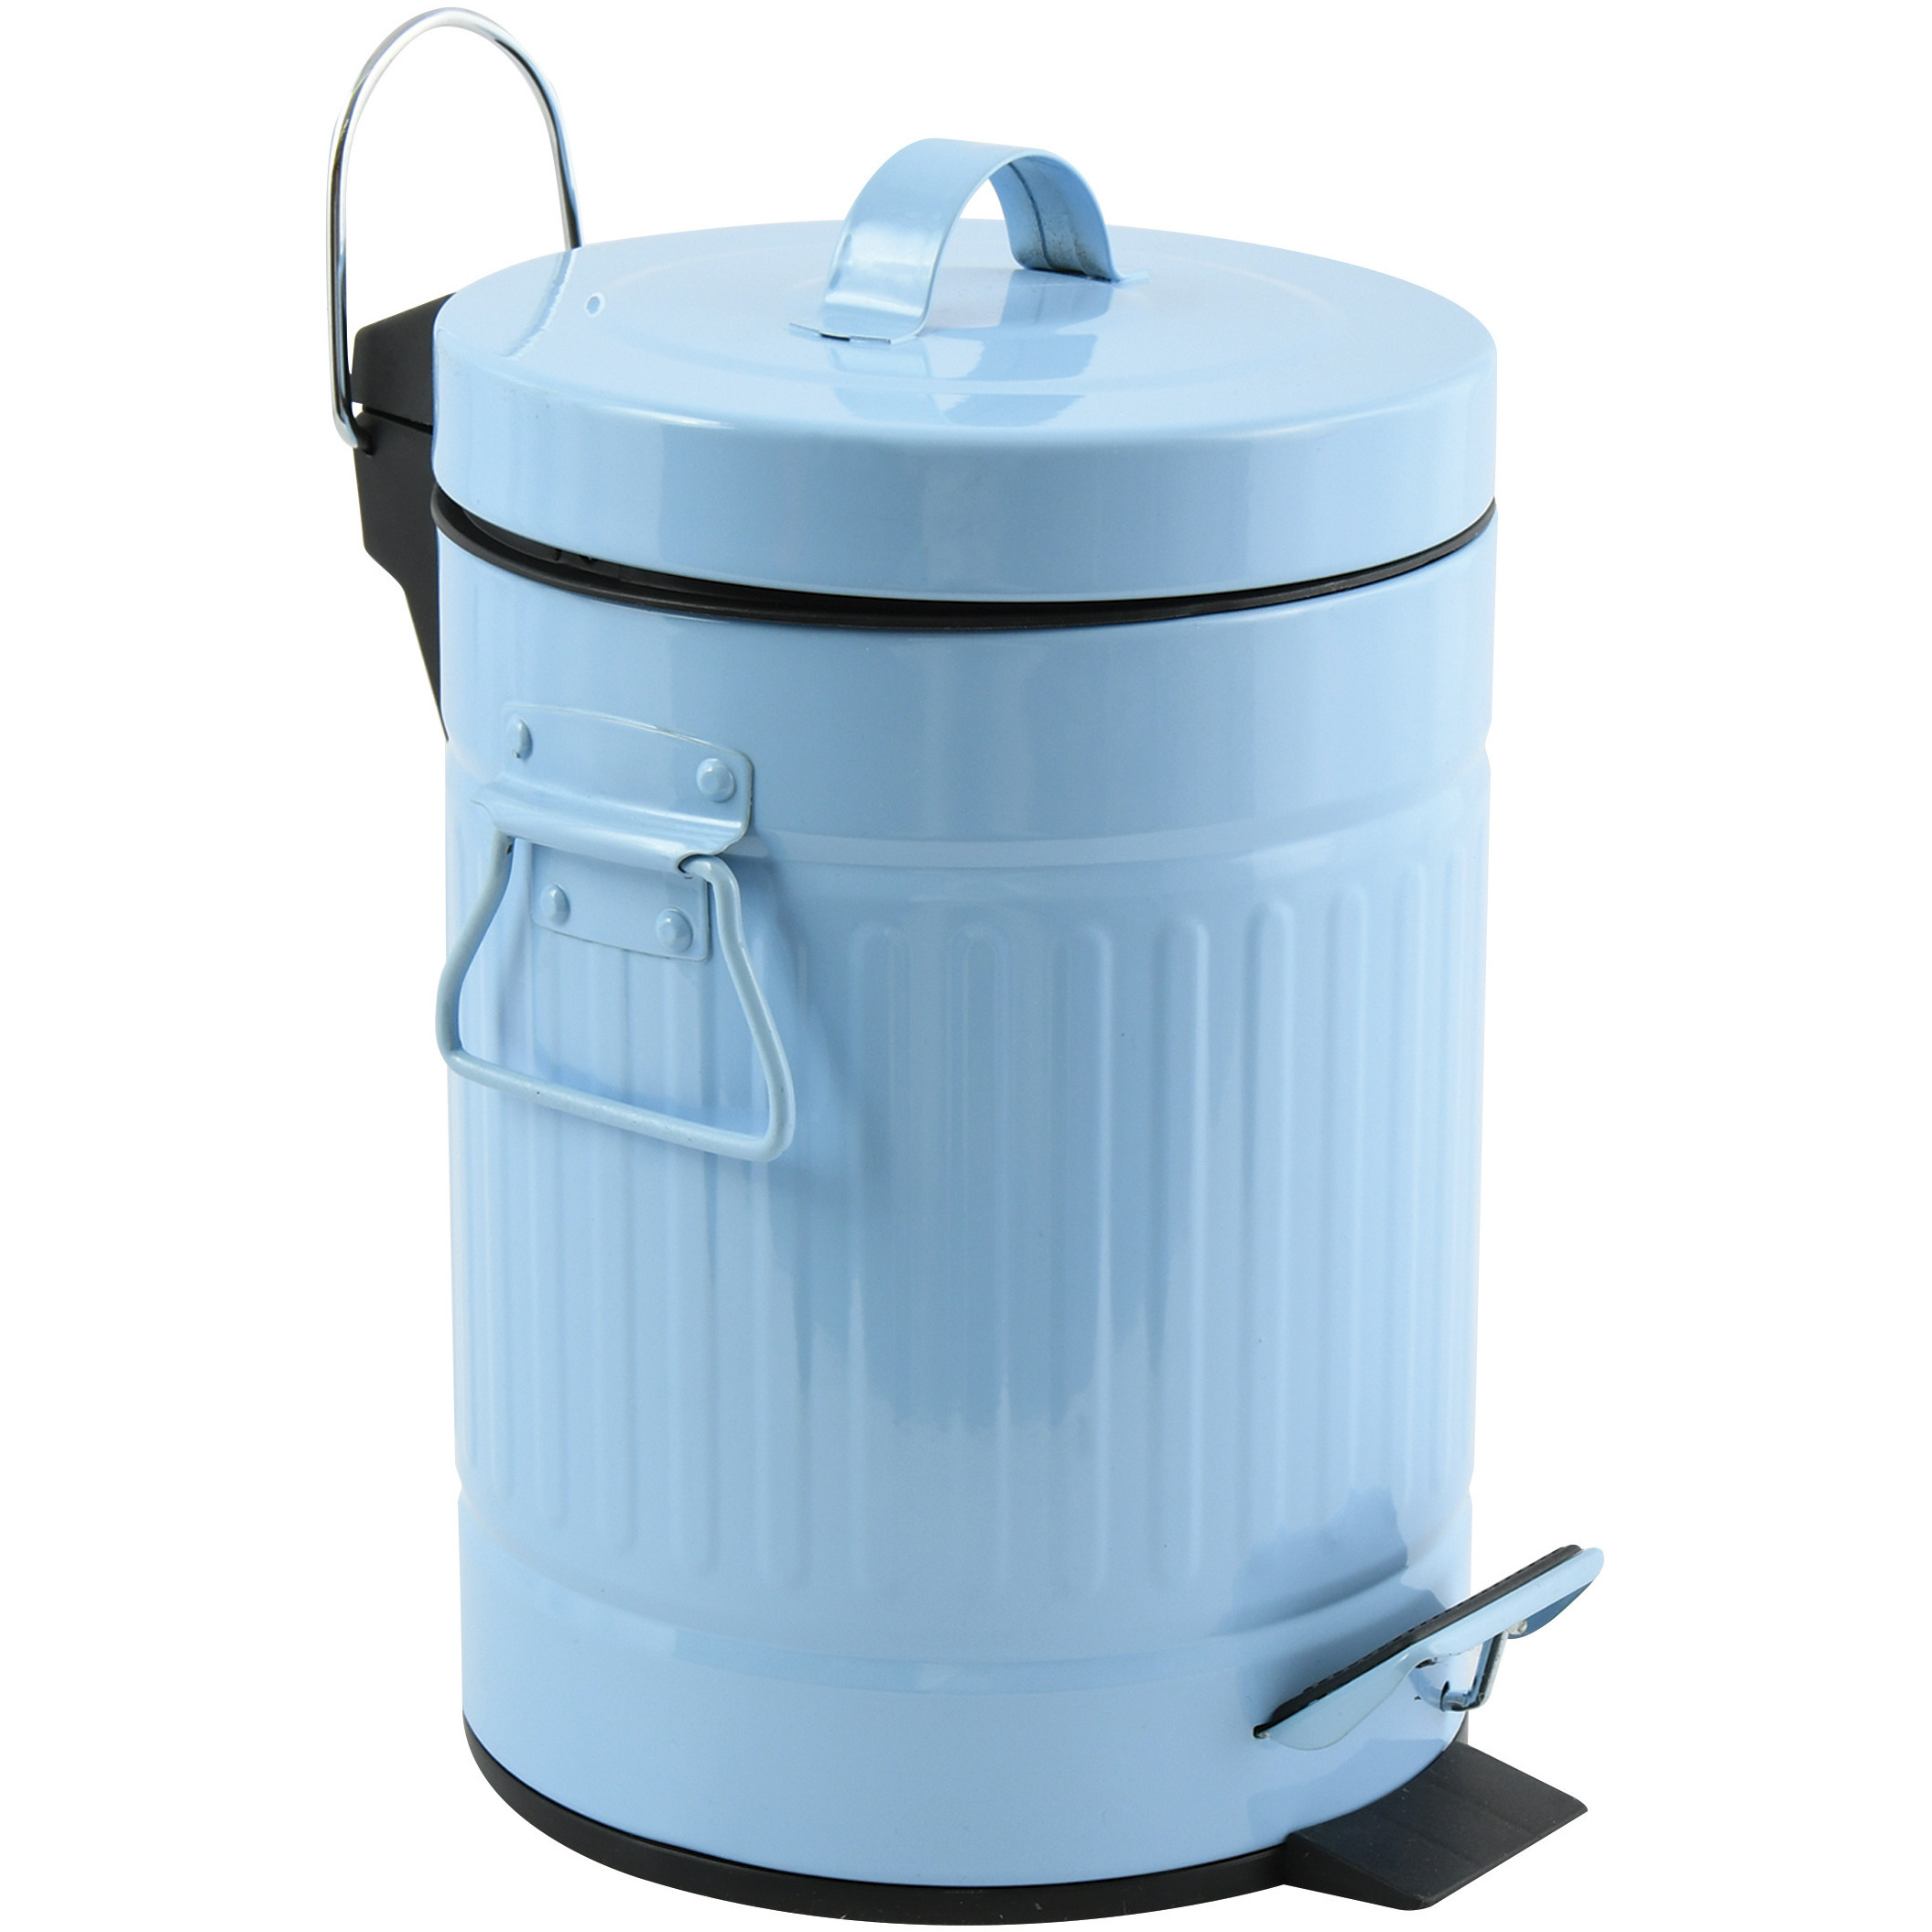 Prullenbak-pedaalemmer Industrial metaal pastel blauw 3 liter 17 x 26 cm Badkamer-toilet